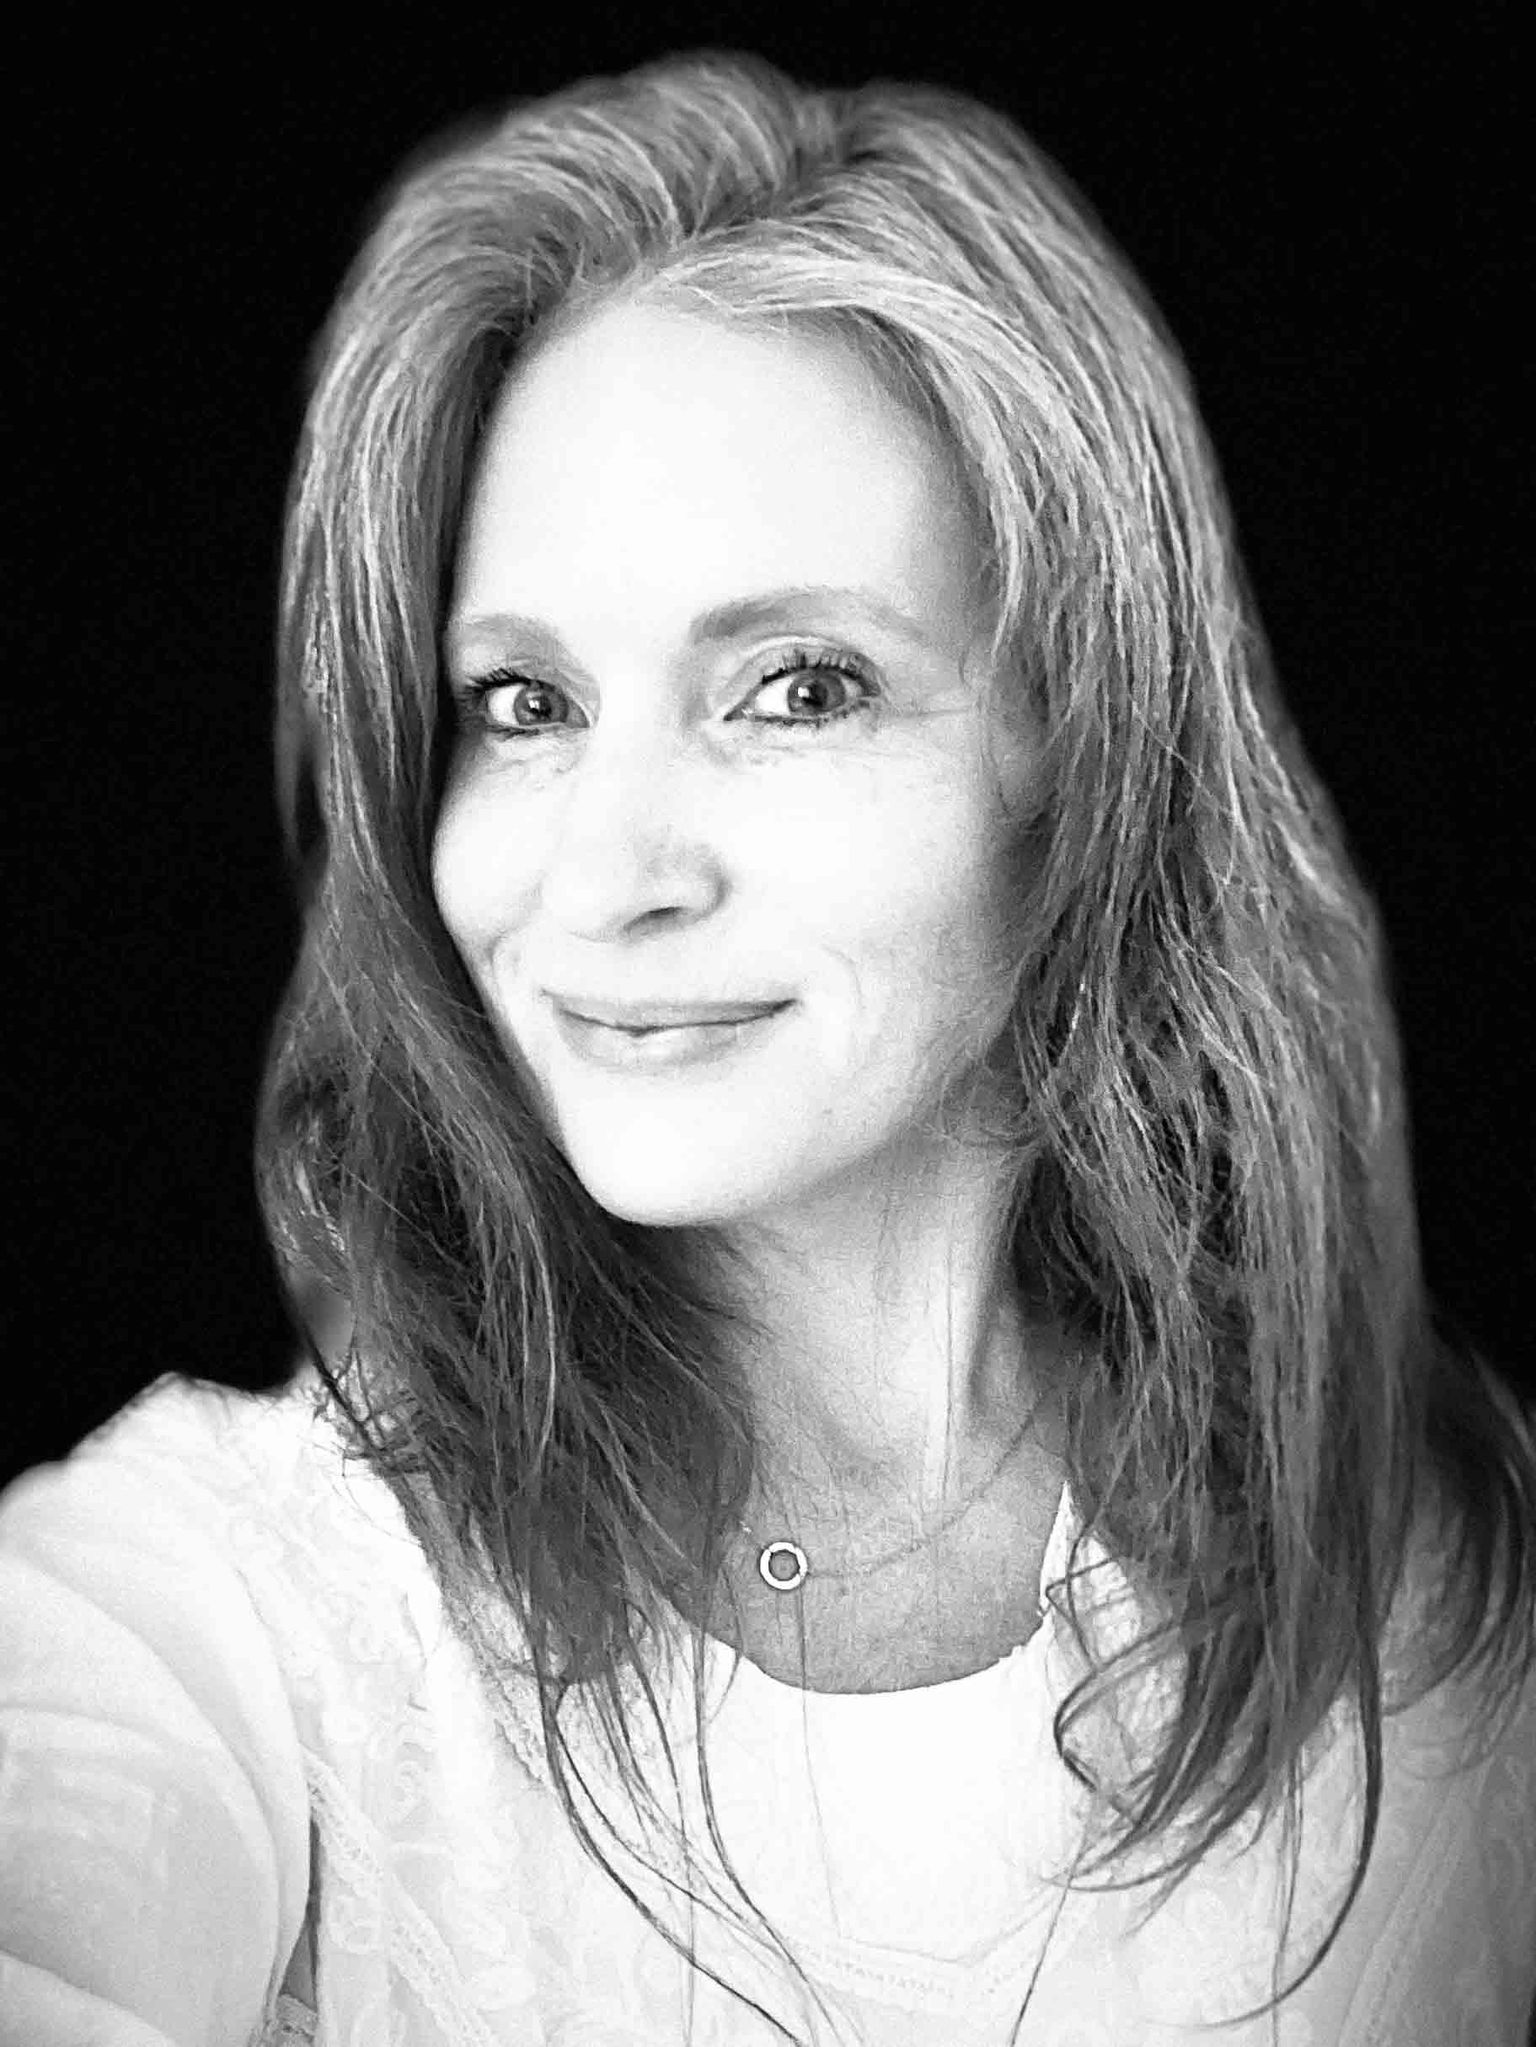 Lowly Labs team member Tara B, smiling in a black and white selfie.